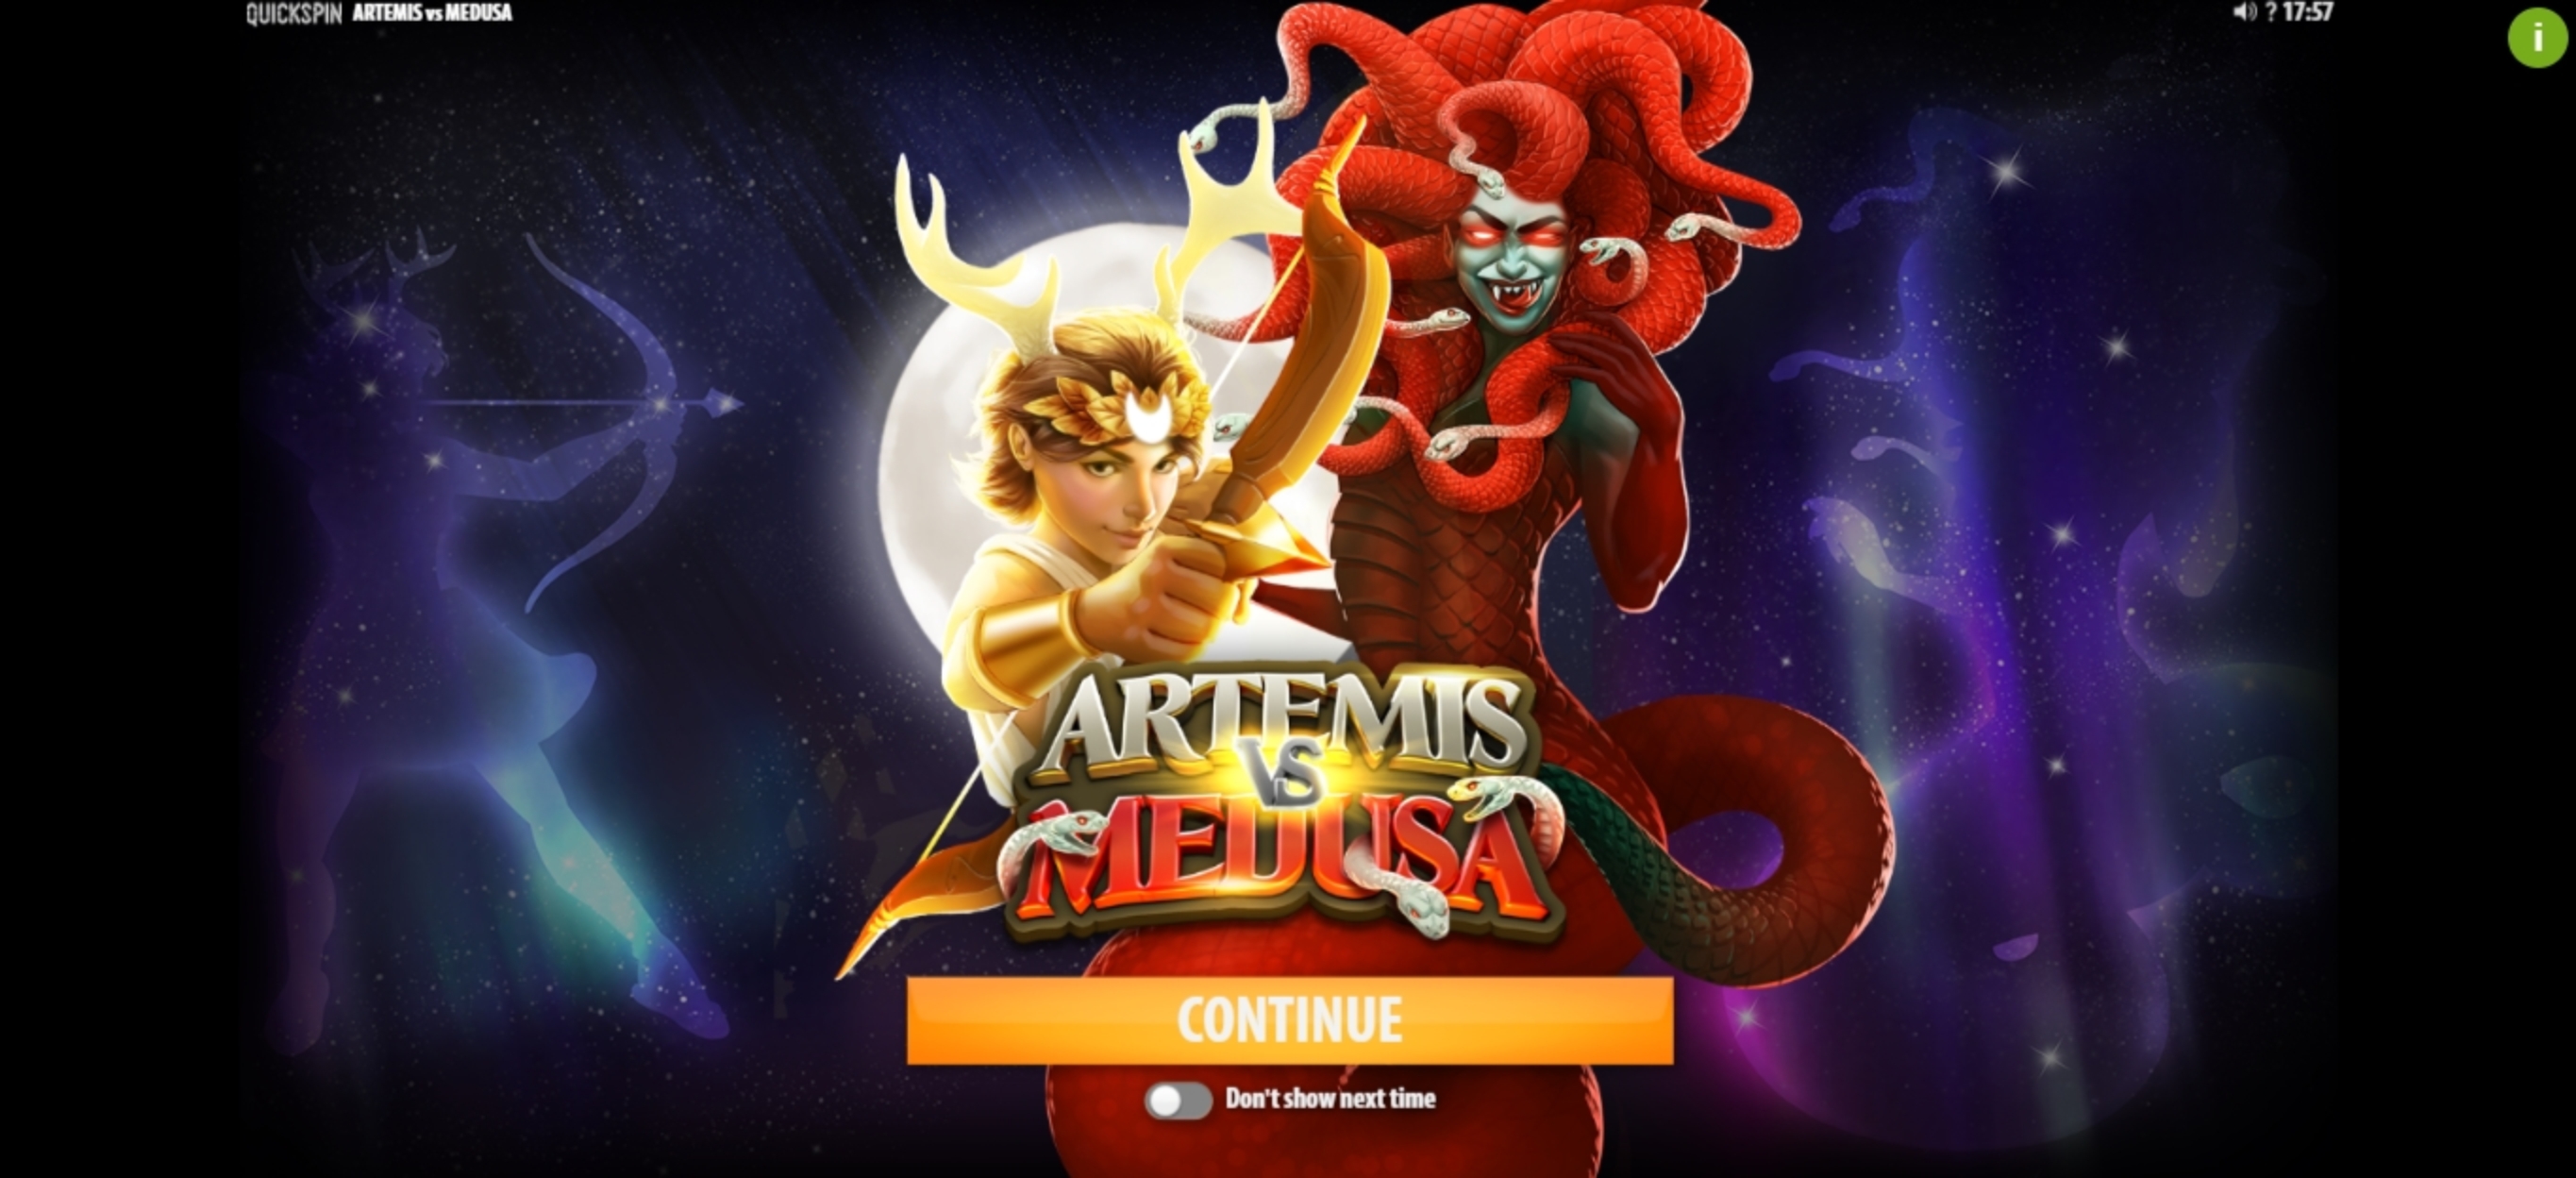 Play Artemis vs Medusa Free Casino Slot Game by Quickspin